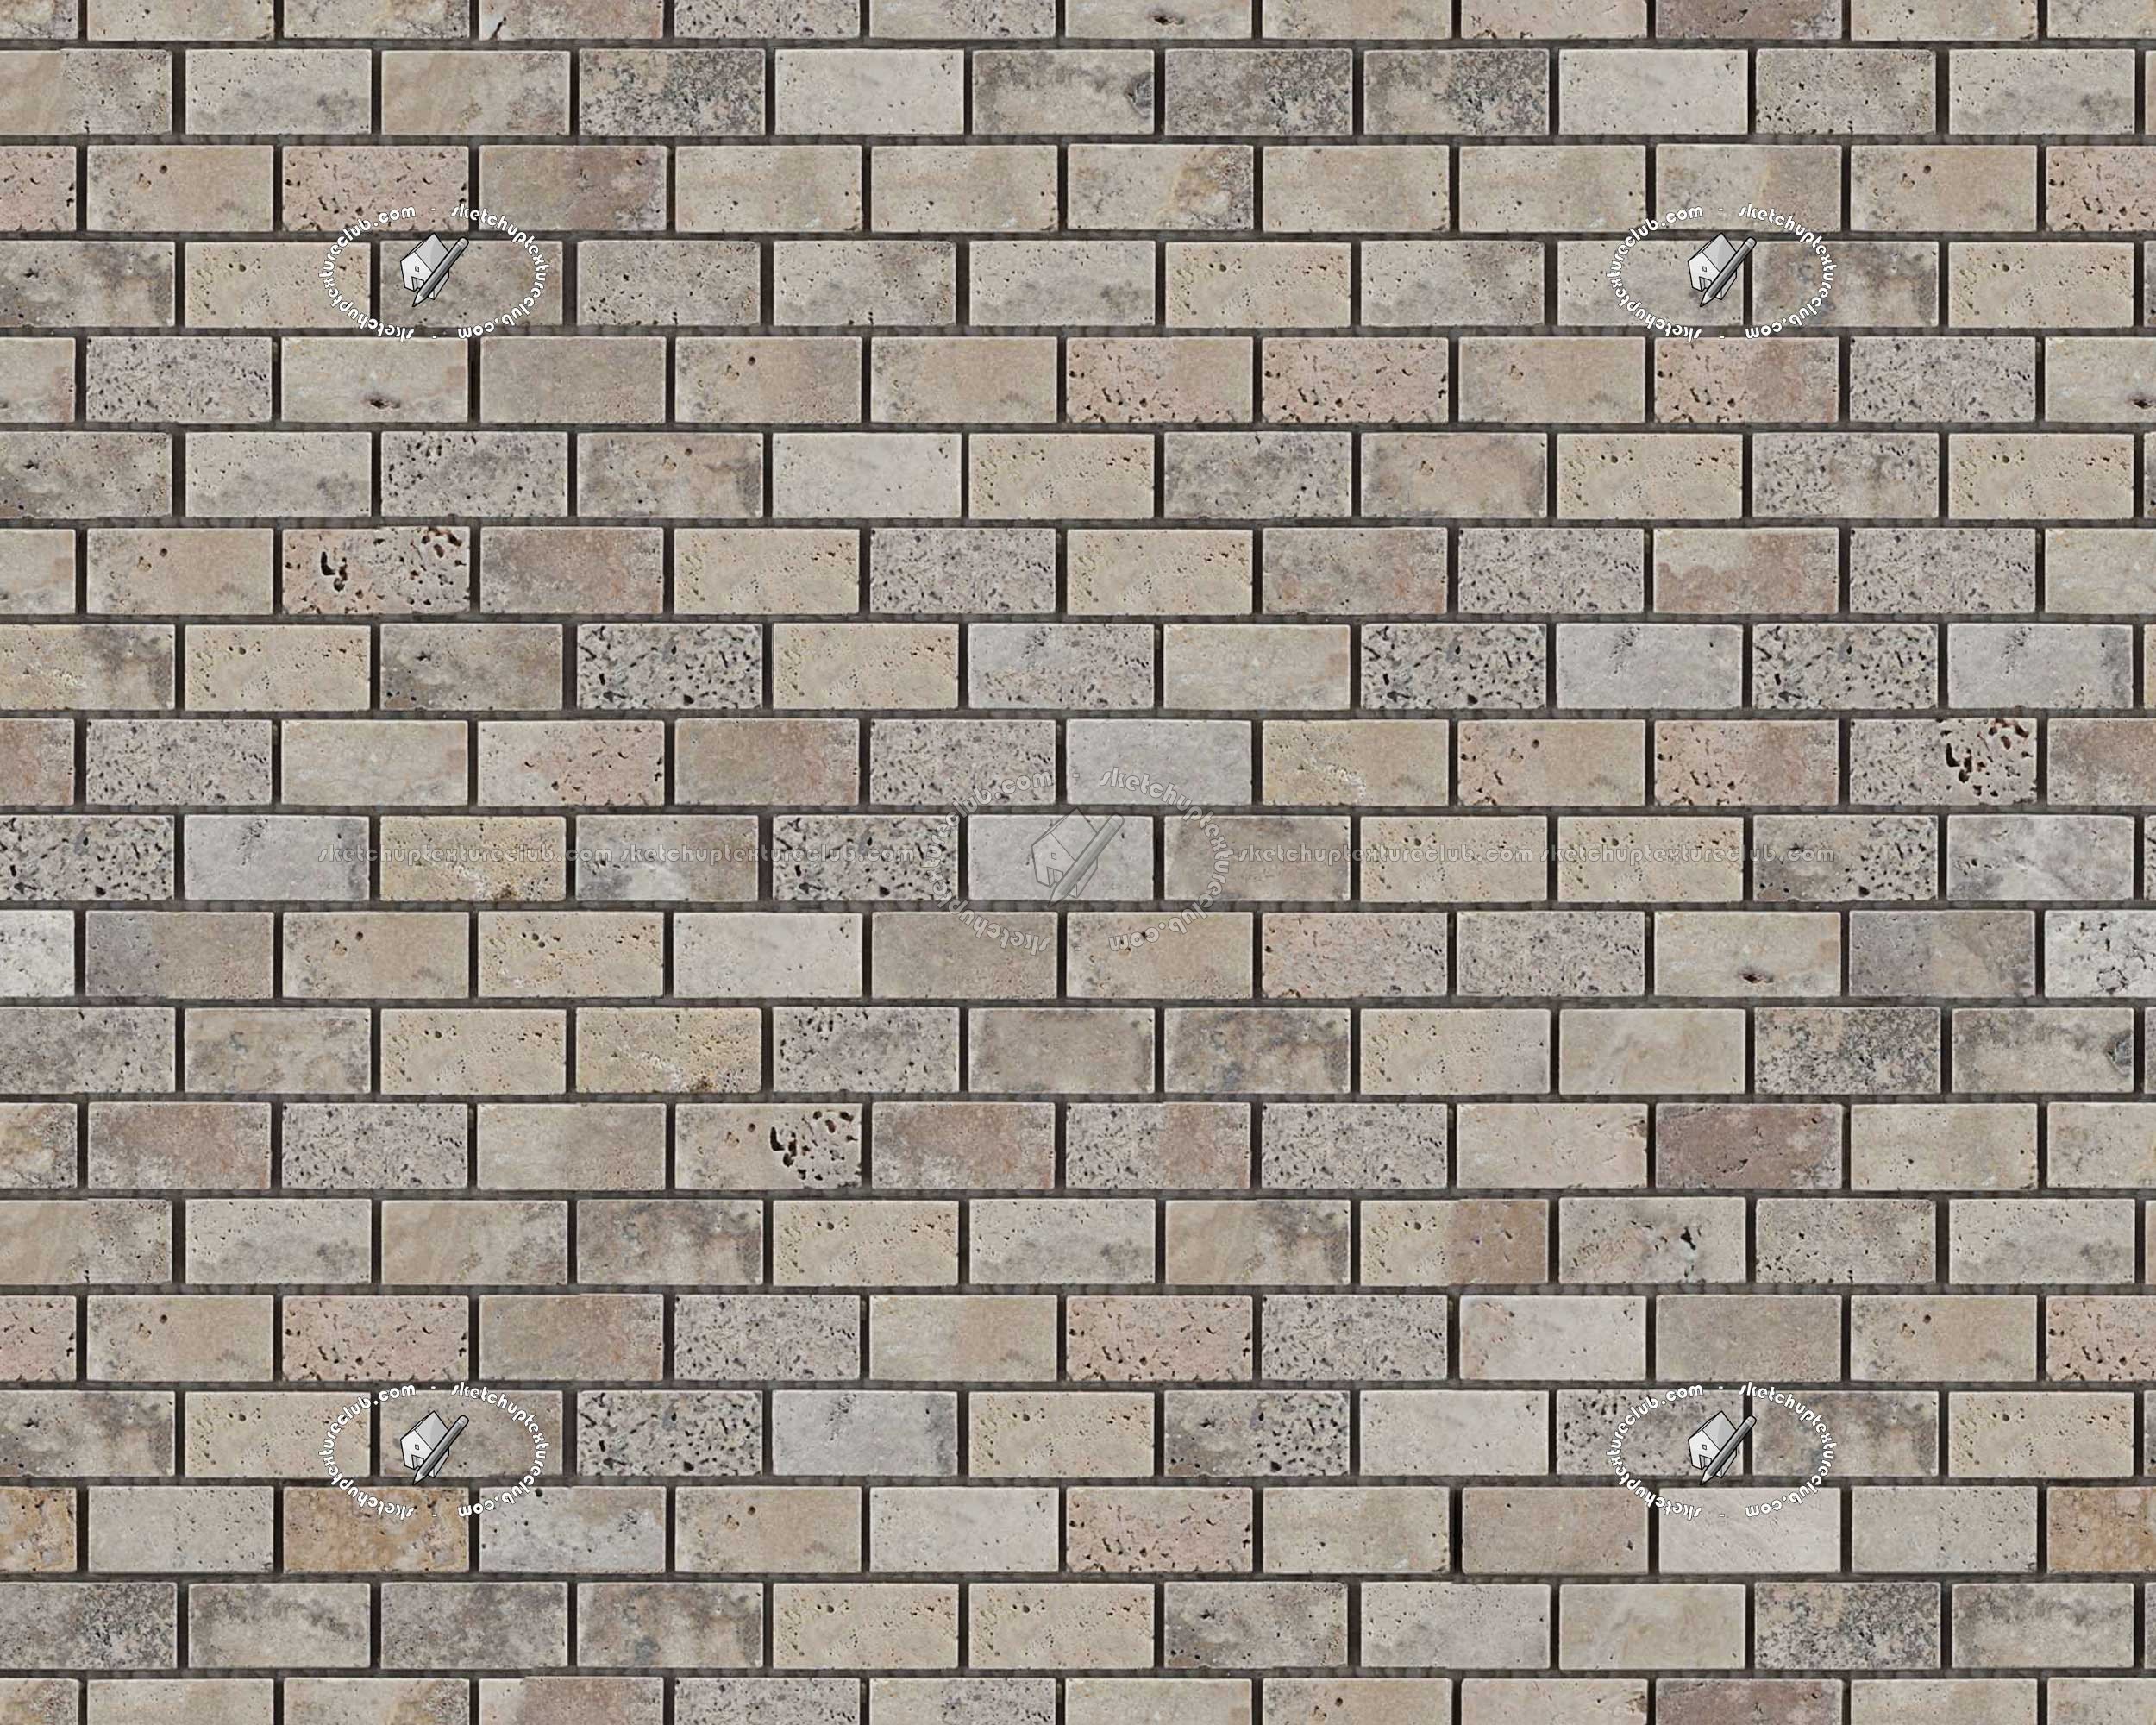 Brick Wall Cladding Texture | peacecommission.kdsg.gov.ng